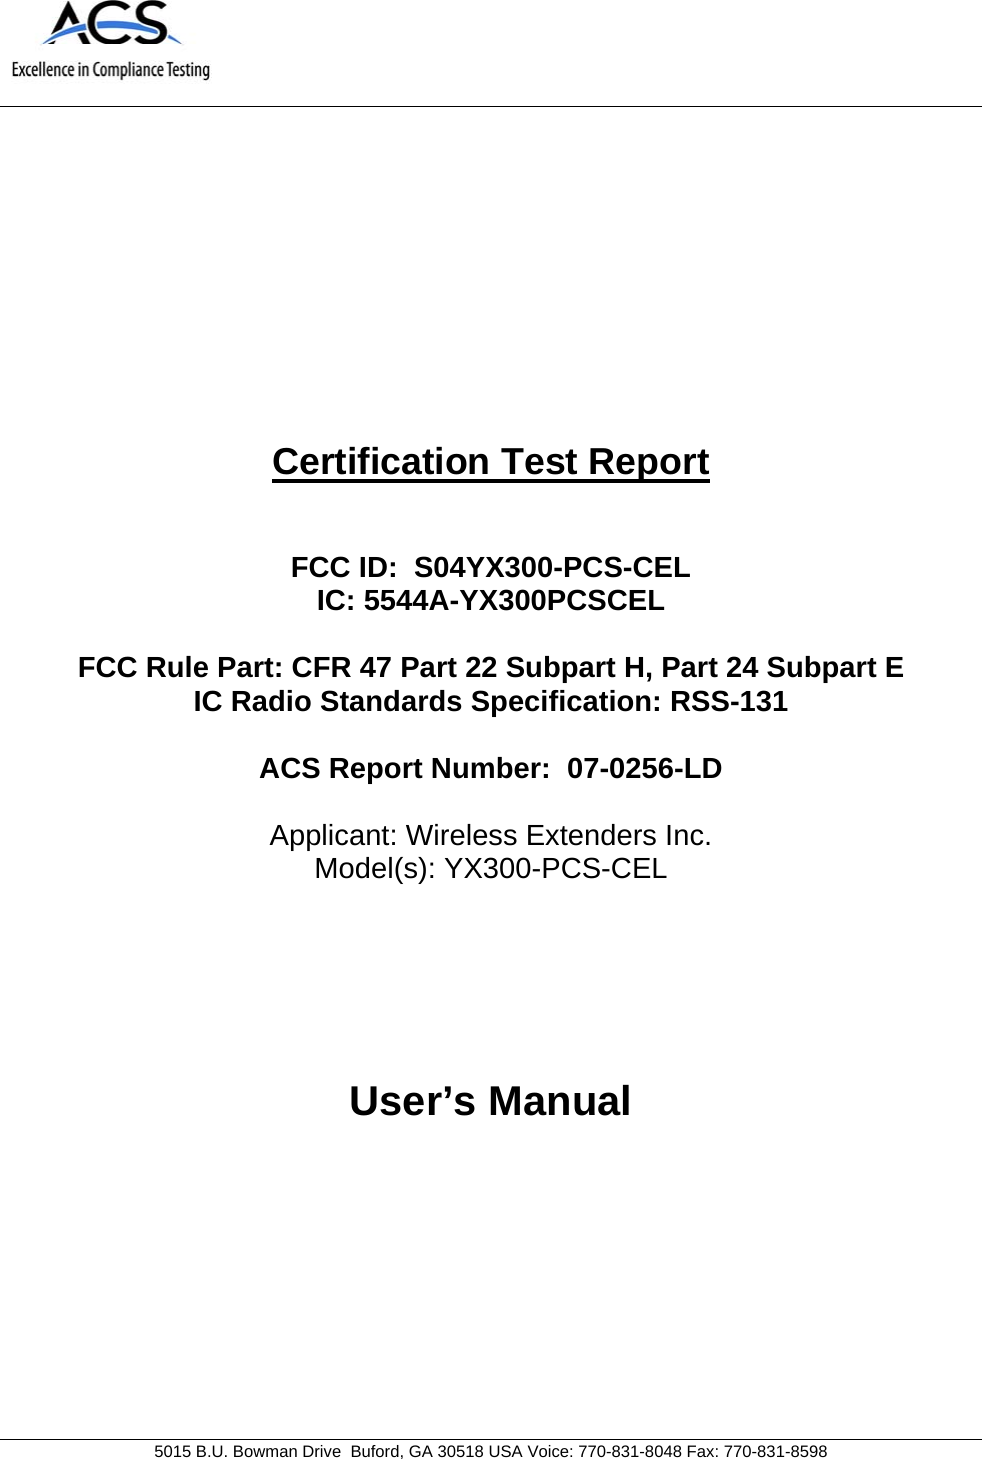                               5015 B.U. Bowman Drive  Buford, GA 30518 USA Voice: 770-831-8048 Fax: 770-831-8598   Certification Test Report   FCC ID:  S04YX300-PCS-CEL IC: 5544A-YX300PCSCEL  FCC Rule Part: CFR 47 Part 22 Subpart H, Part 24 Subpart E IC Radio Standards Specification: RSS-131   ACS Report Number:  07-0256-LD   Applicant: Wireless Extenders Inc. Model(s): YX300-PCS-CEL     User’s Manual 